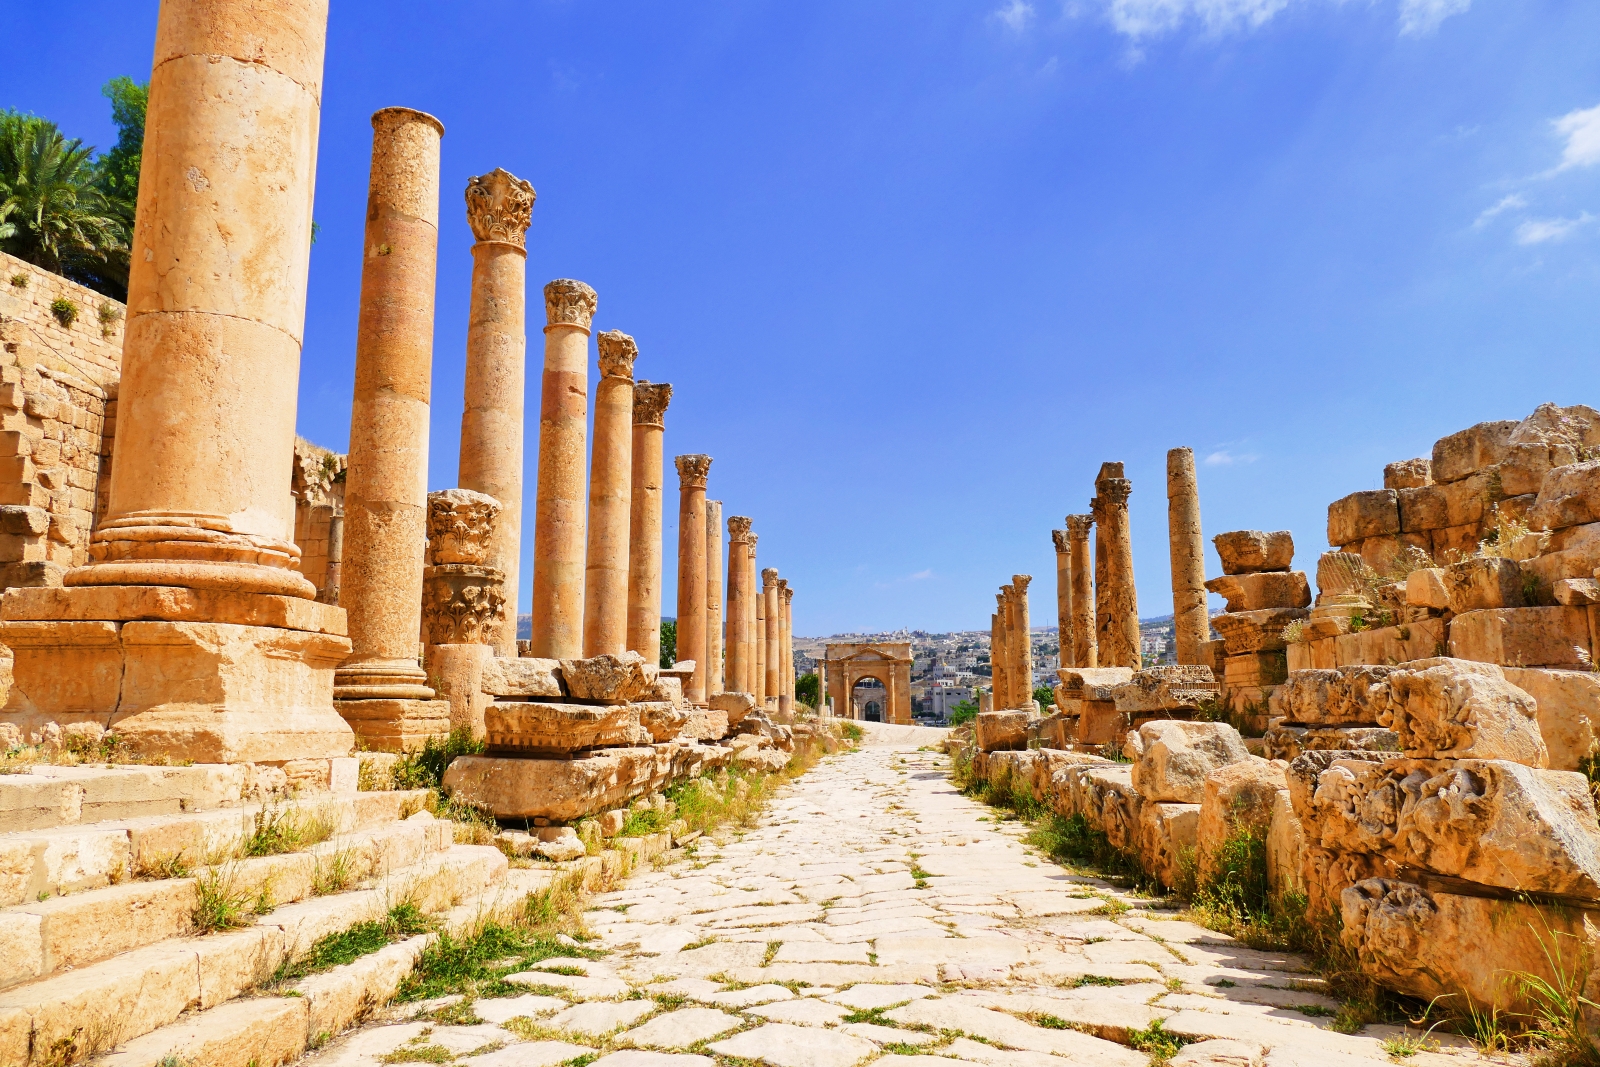 Ancient street with towering pillars at Jerash, Jordan